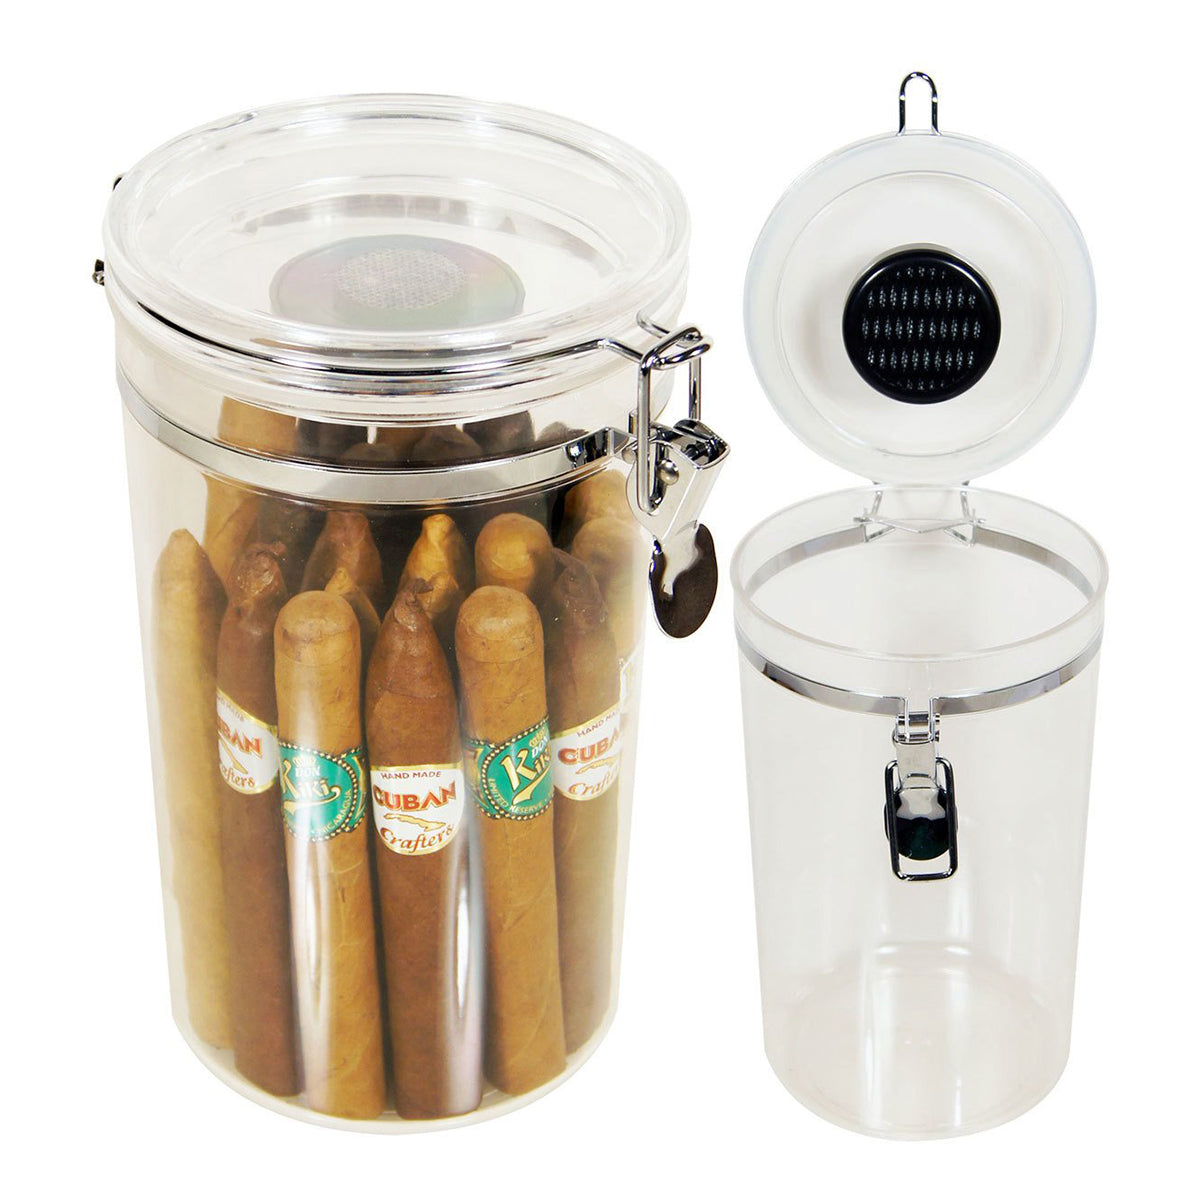 CBC Acrylic Cigar Jar Humidor Humidifier for 25 Cigars